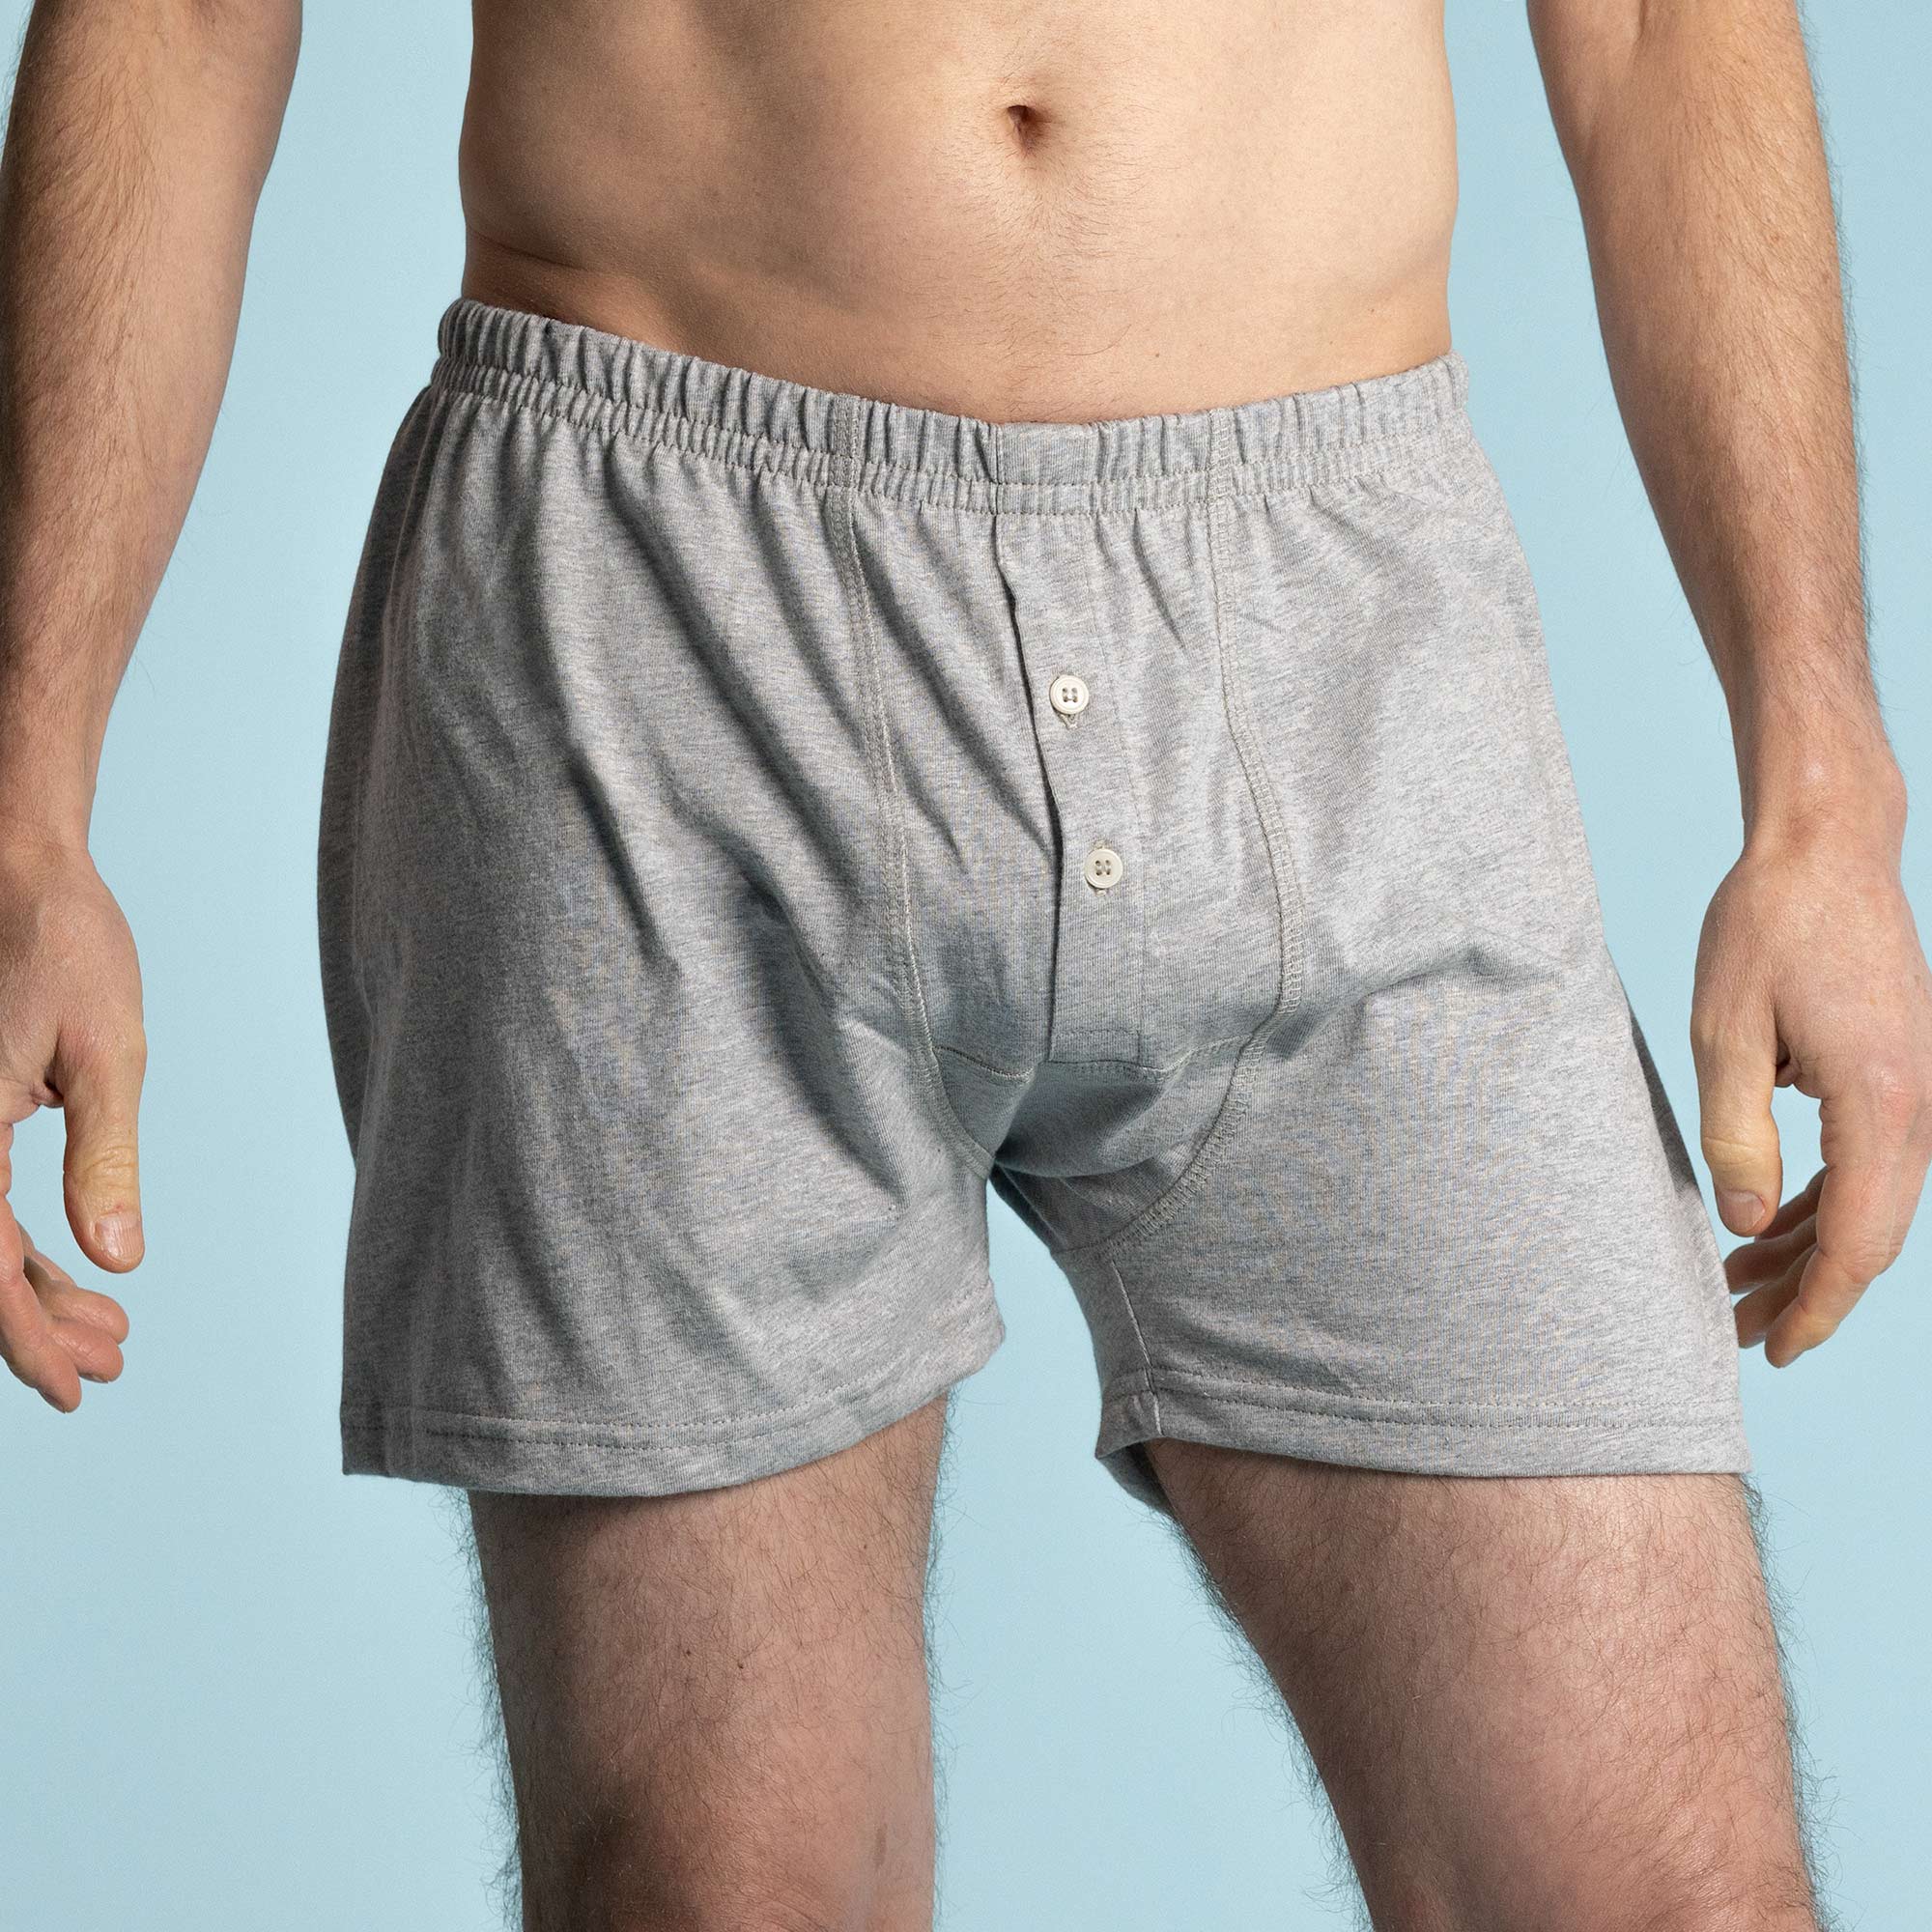 100% Knit Cotton Boxer Shorts